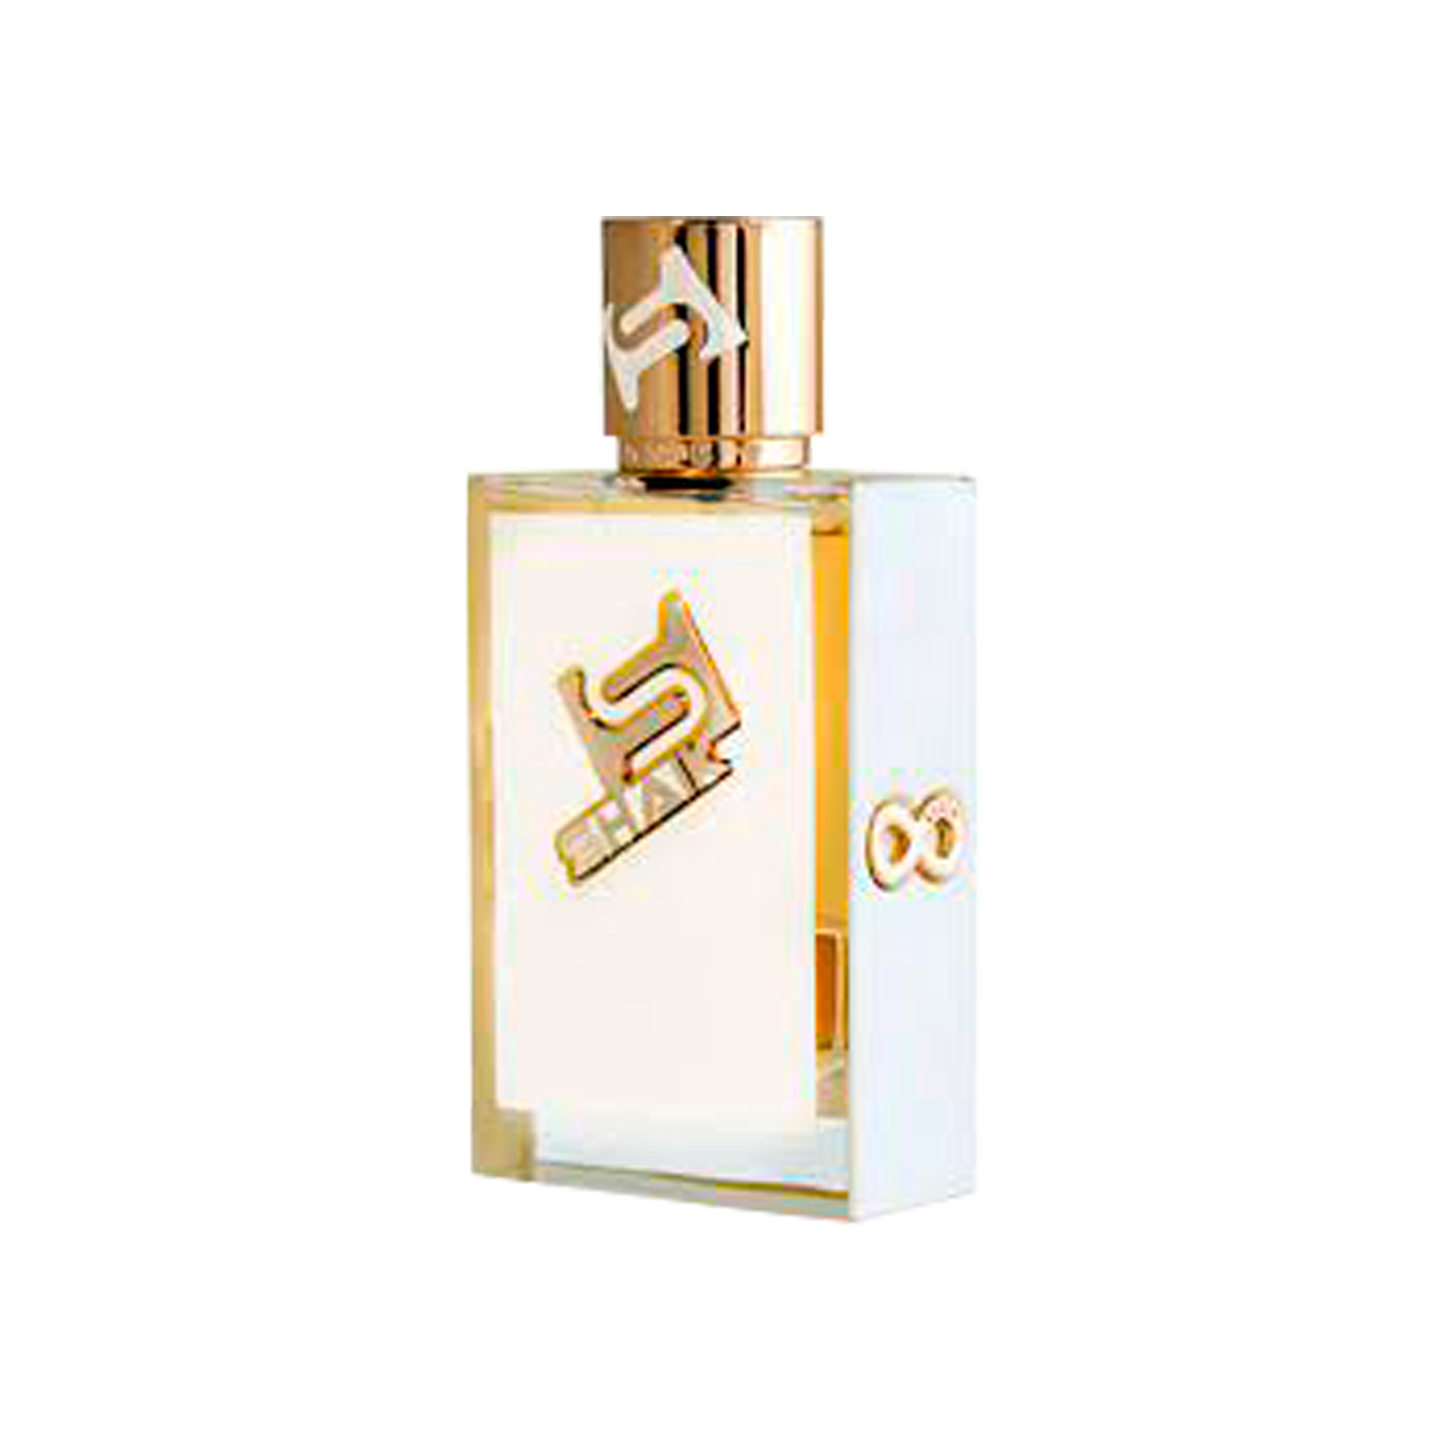 BY SHAIK ALL IS FOR LOVE Perfume - Shaik Perfume